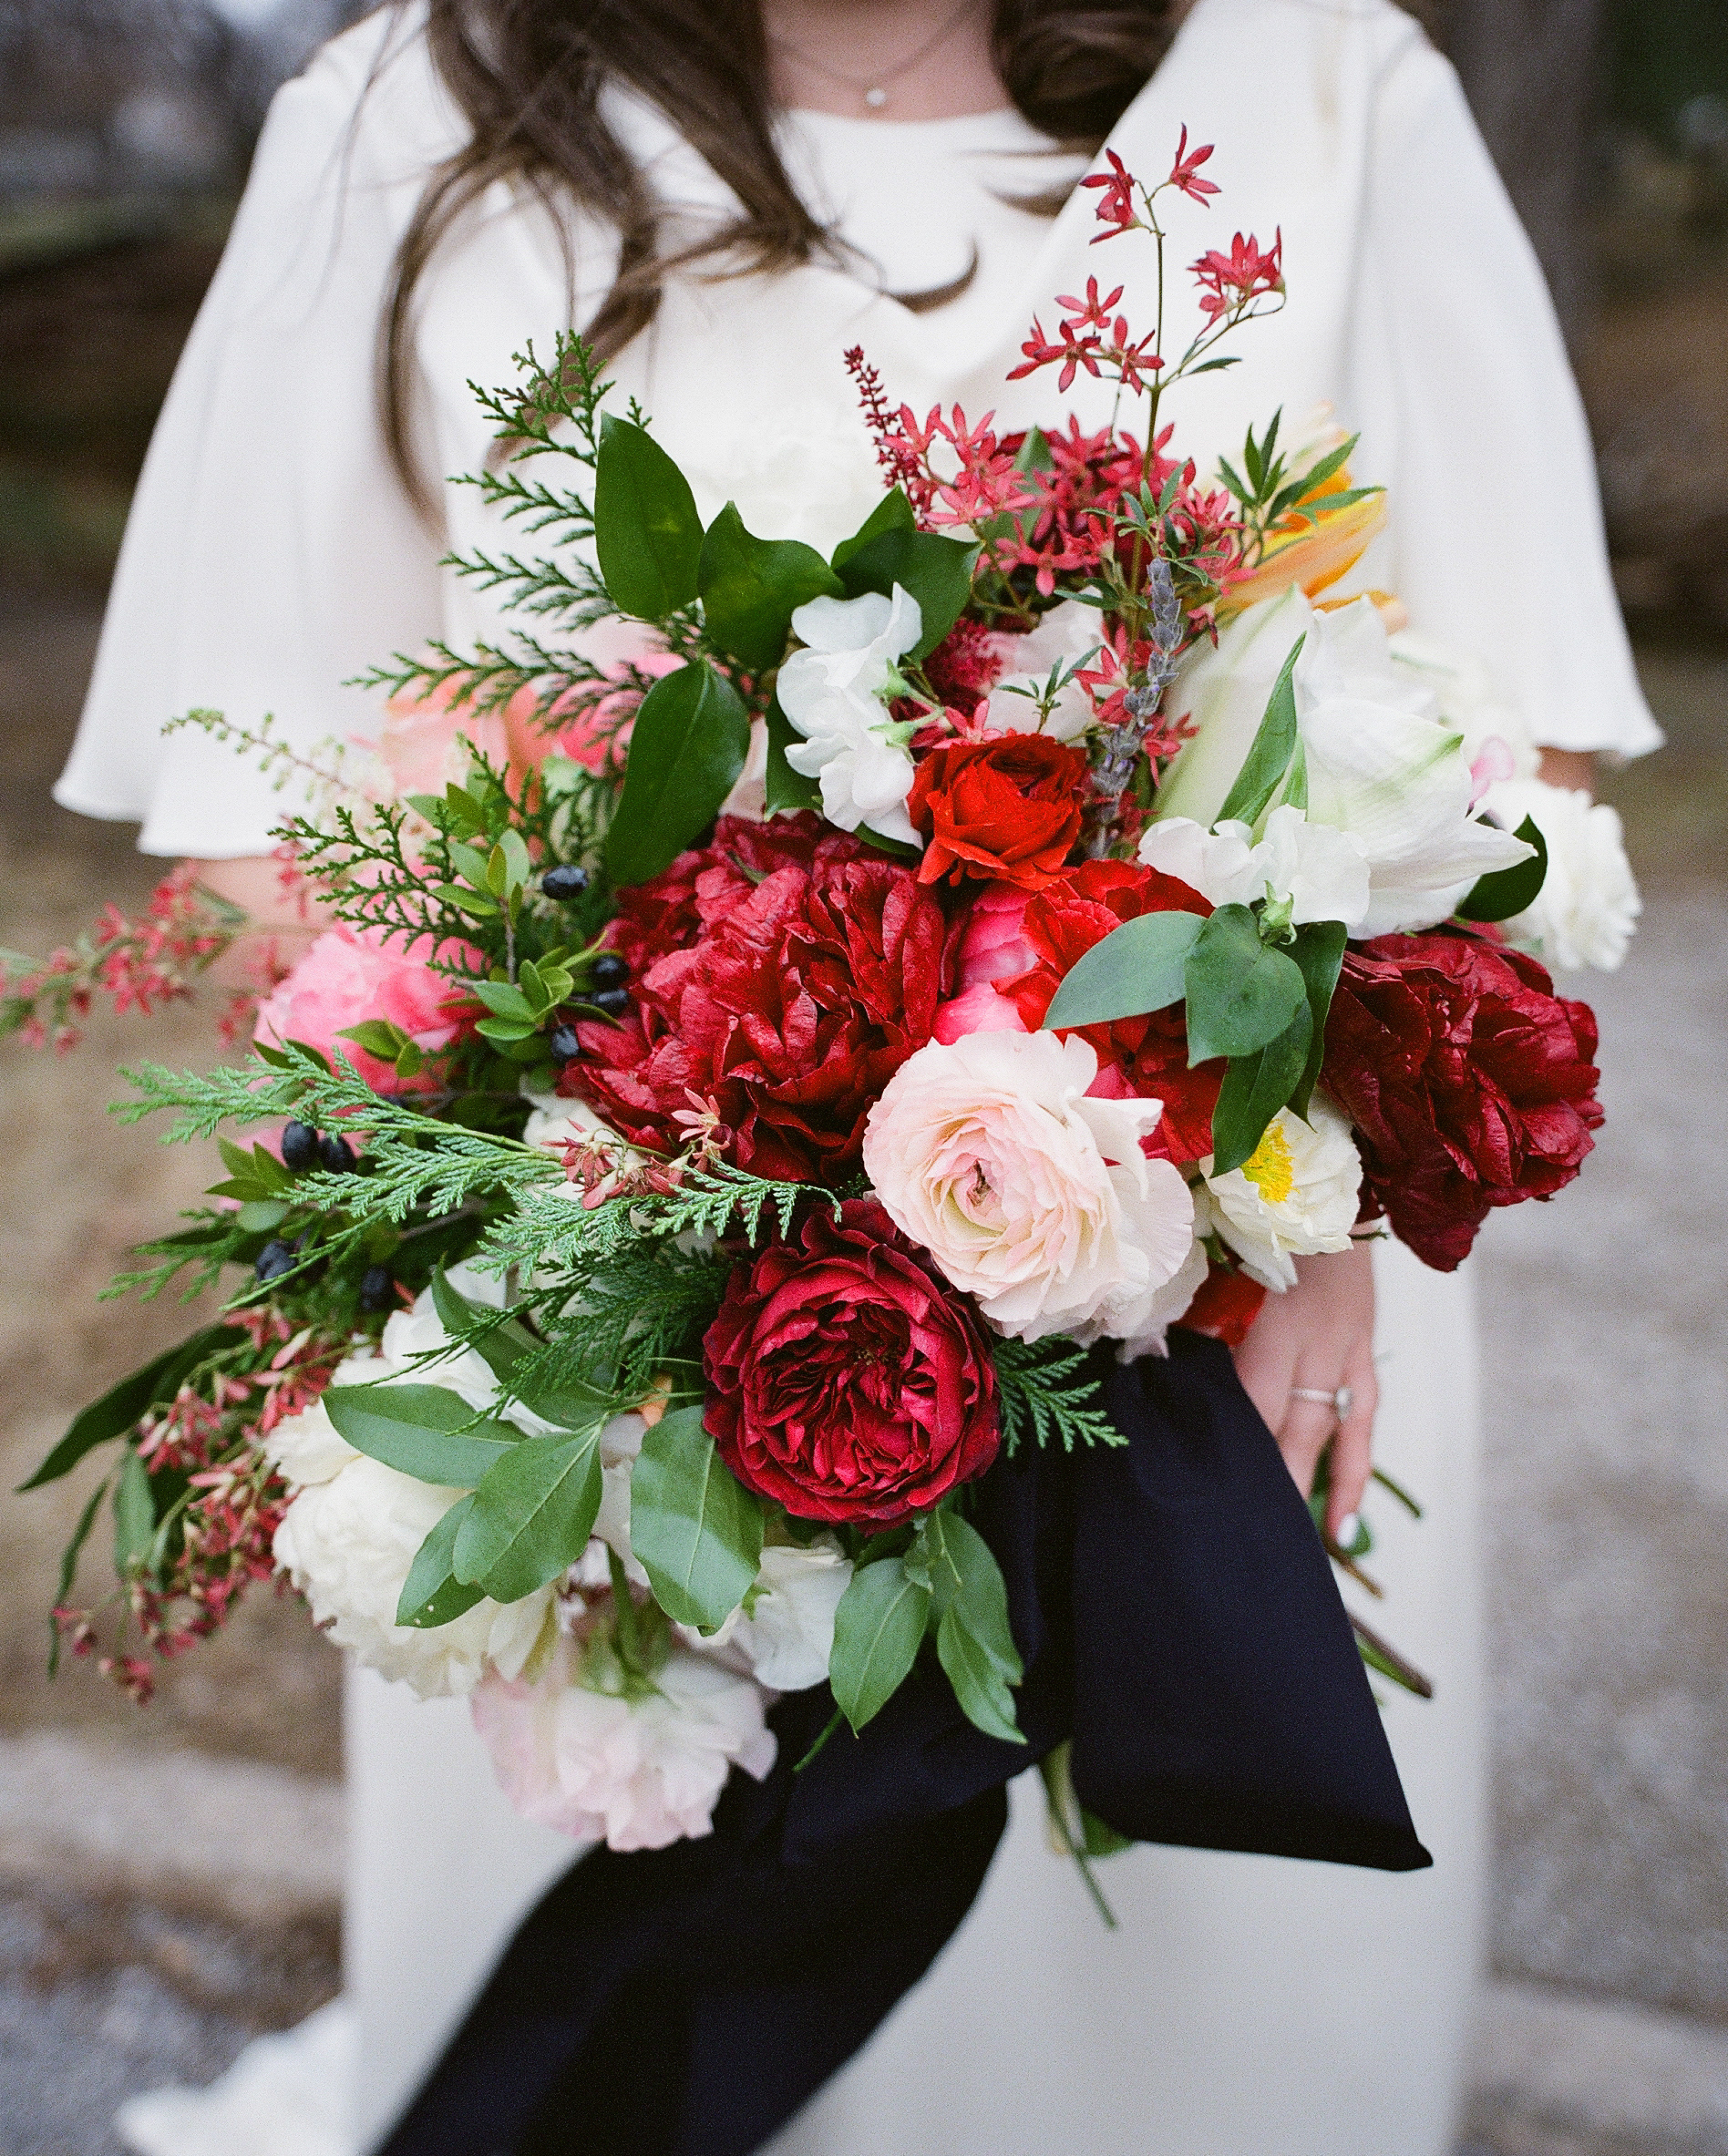 52 Gorgeous Winter Wedding Bouquets Martha Stewart Weddings